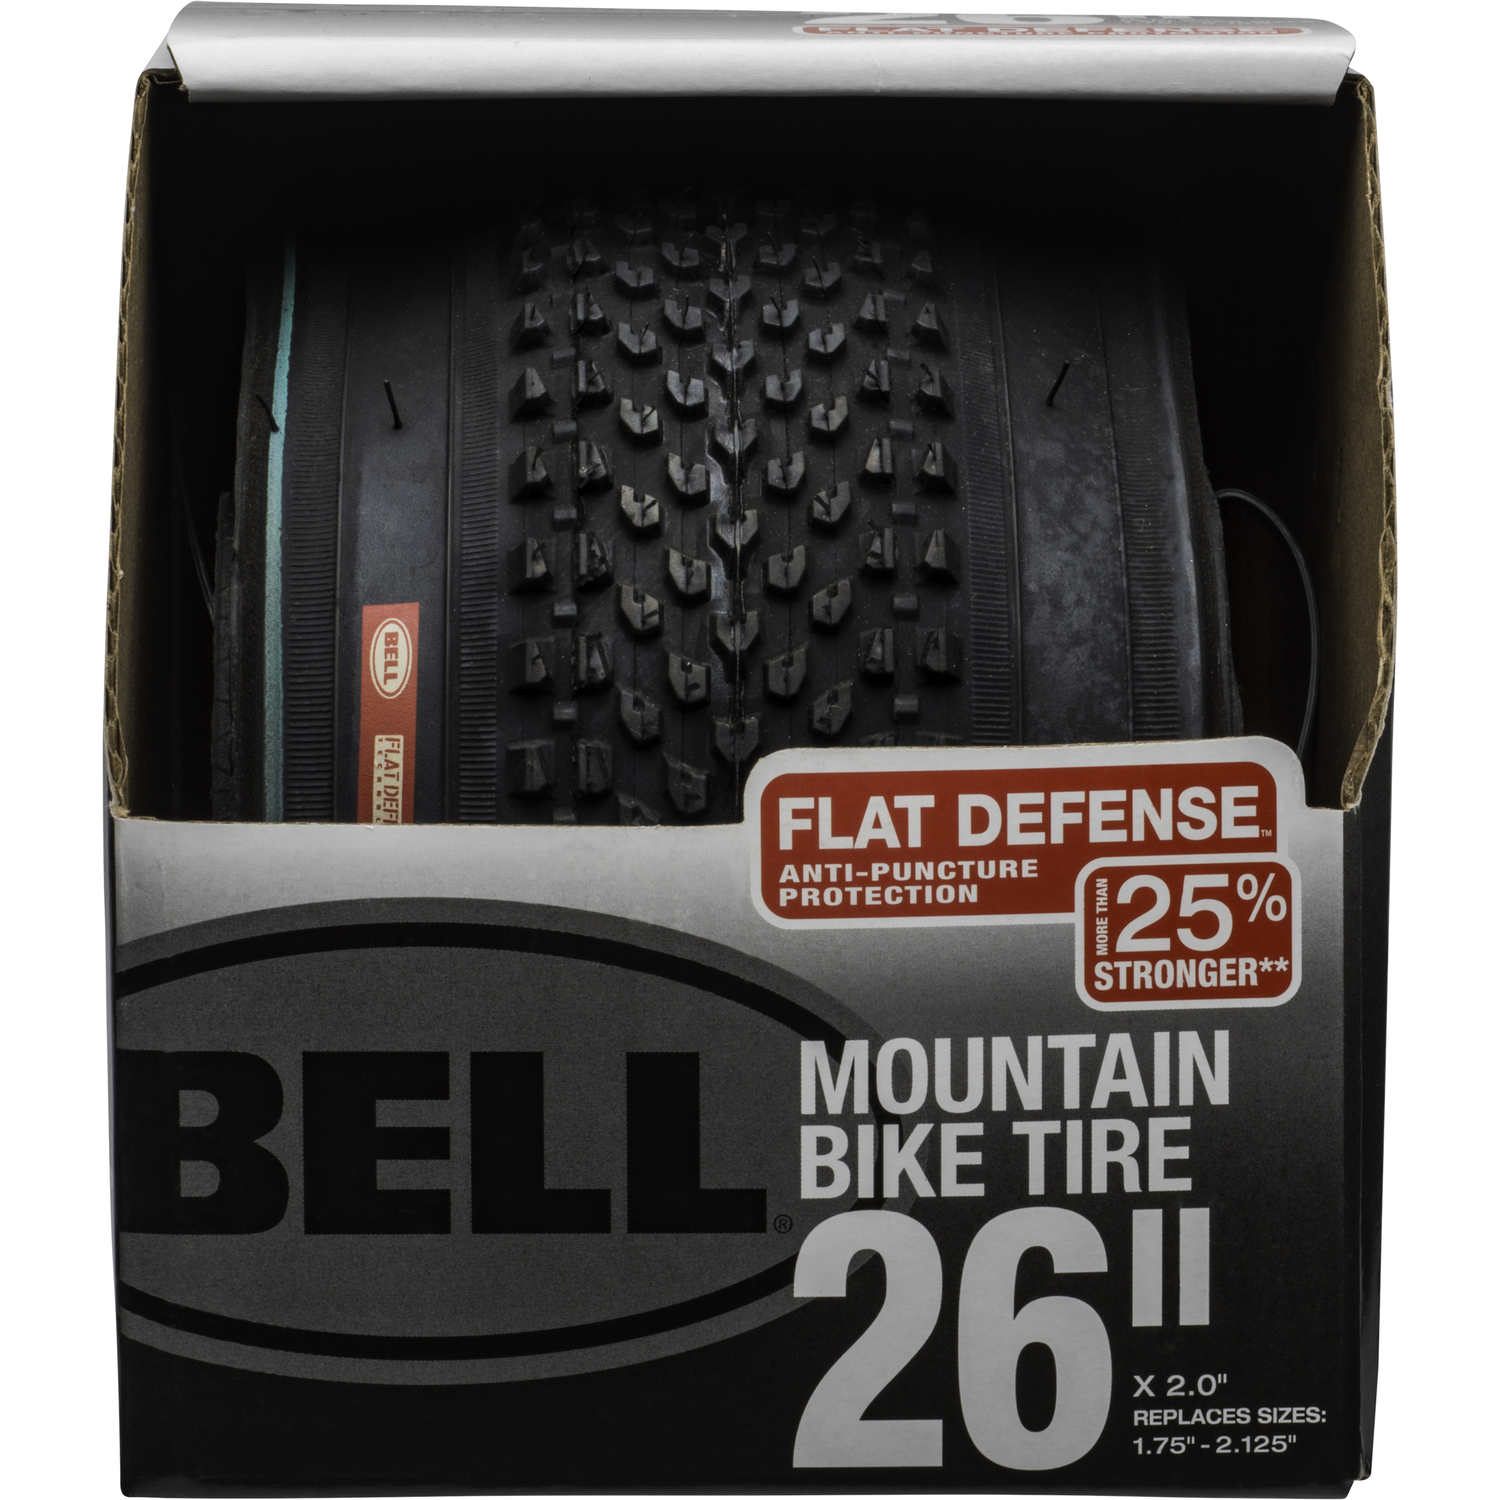 ace hardware bike tires